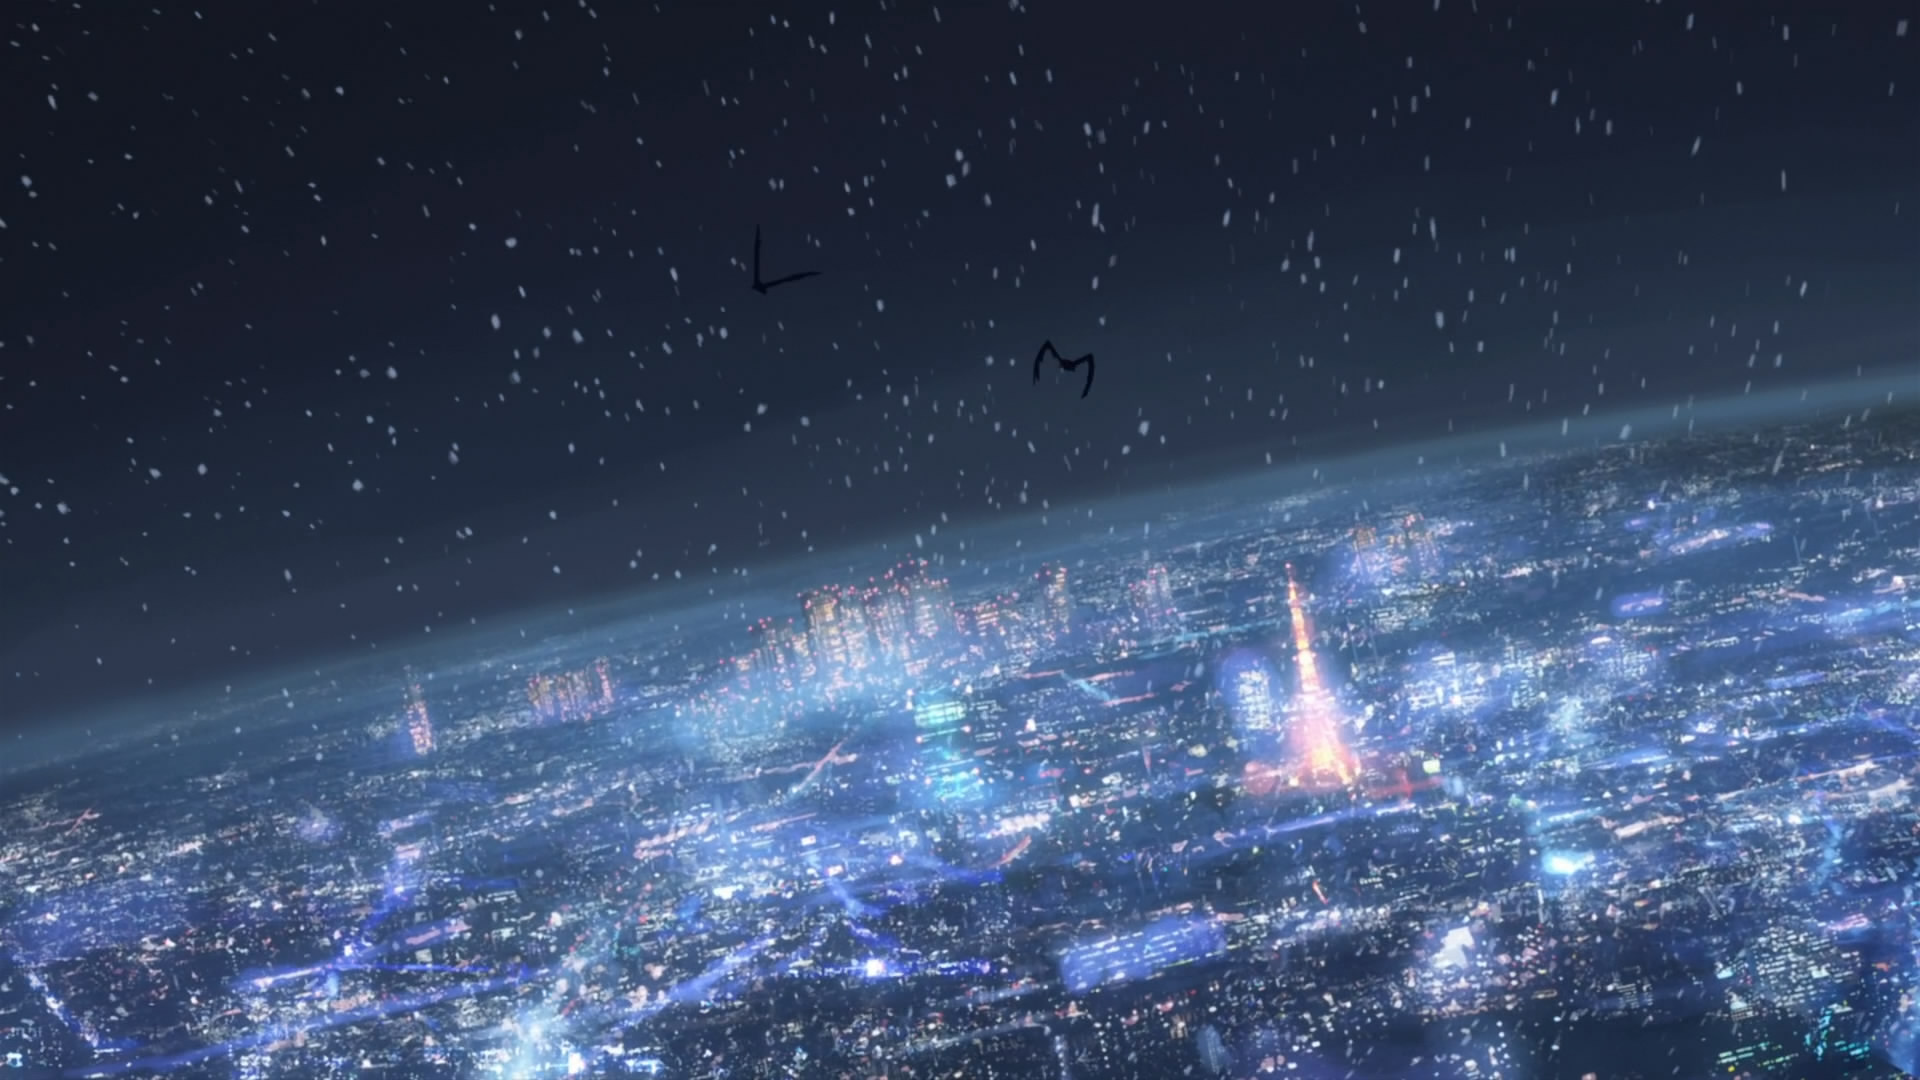 makoto shinkai tapete,atmosphäre,weltraum,himmel,astronomisches objekt,platz